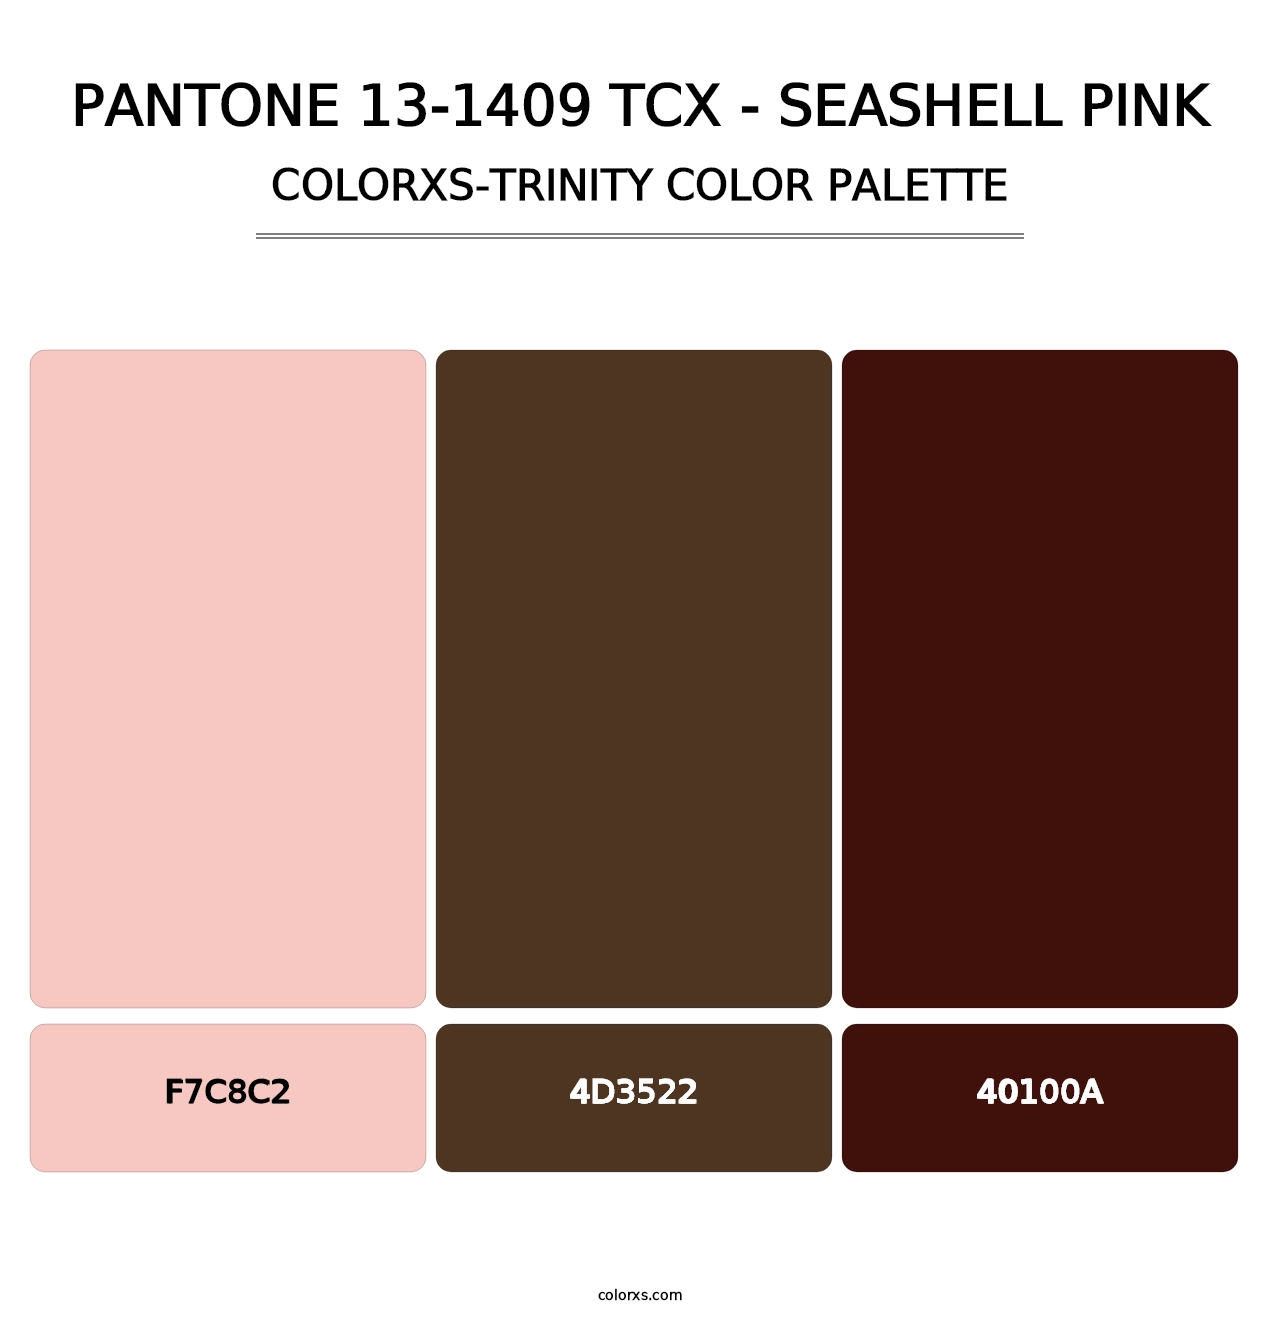 PANTONE 13-1409 TCX - Seashell Pink - Colorxs Trinity Palette